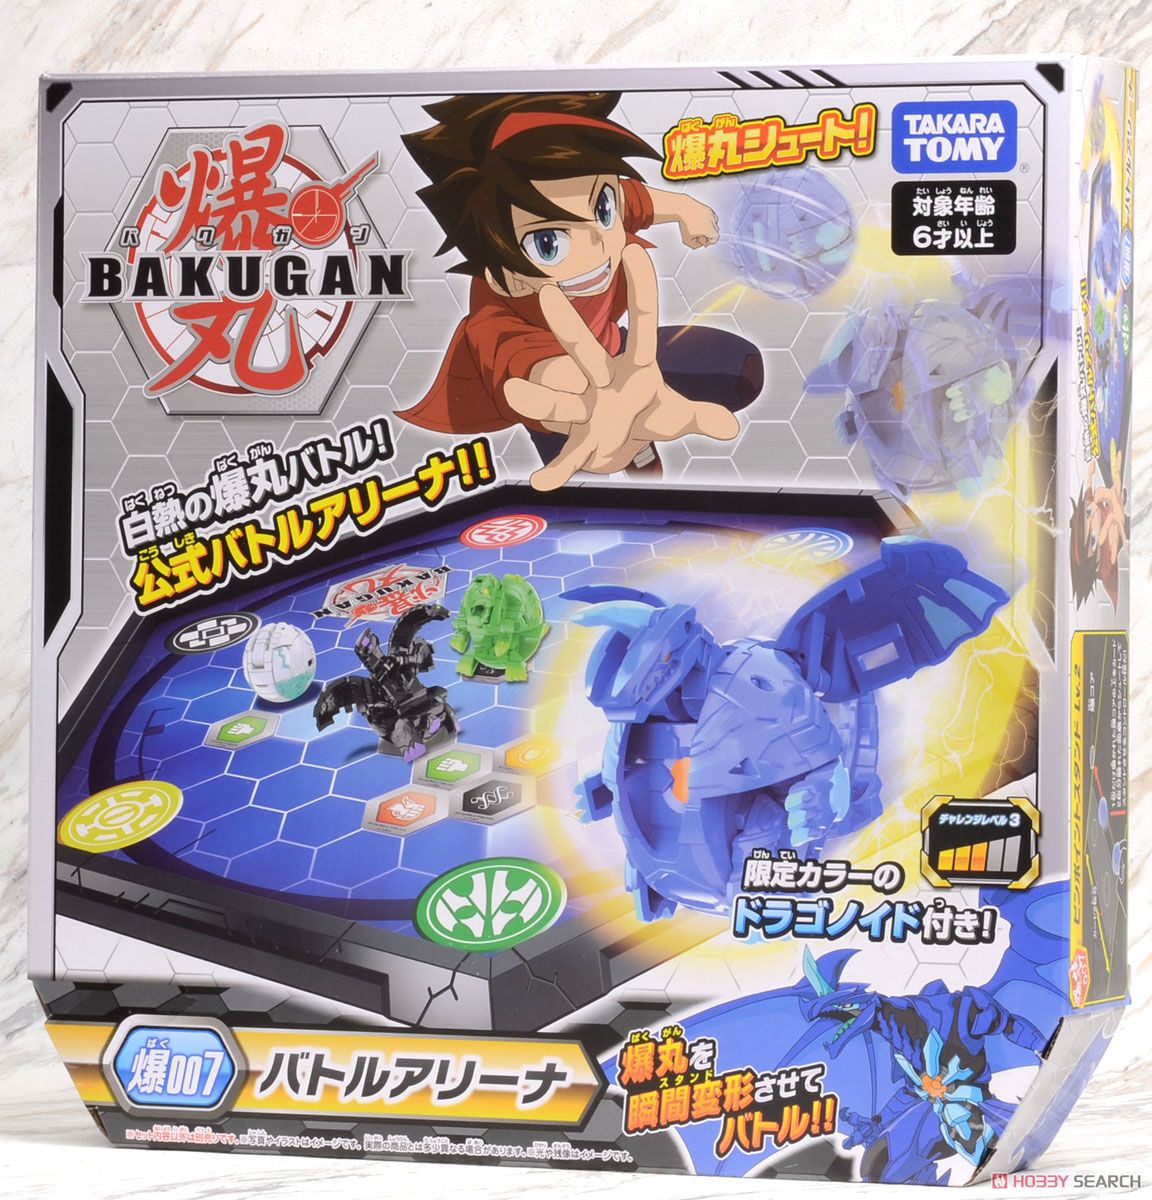 Baku007 Bakugan Battle Arena (Character Toy) Package2